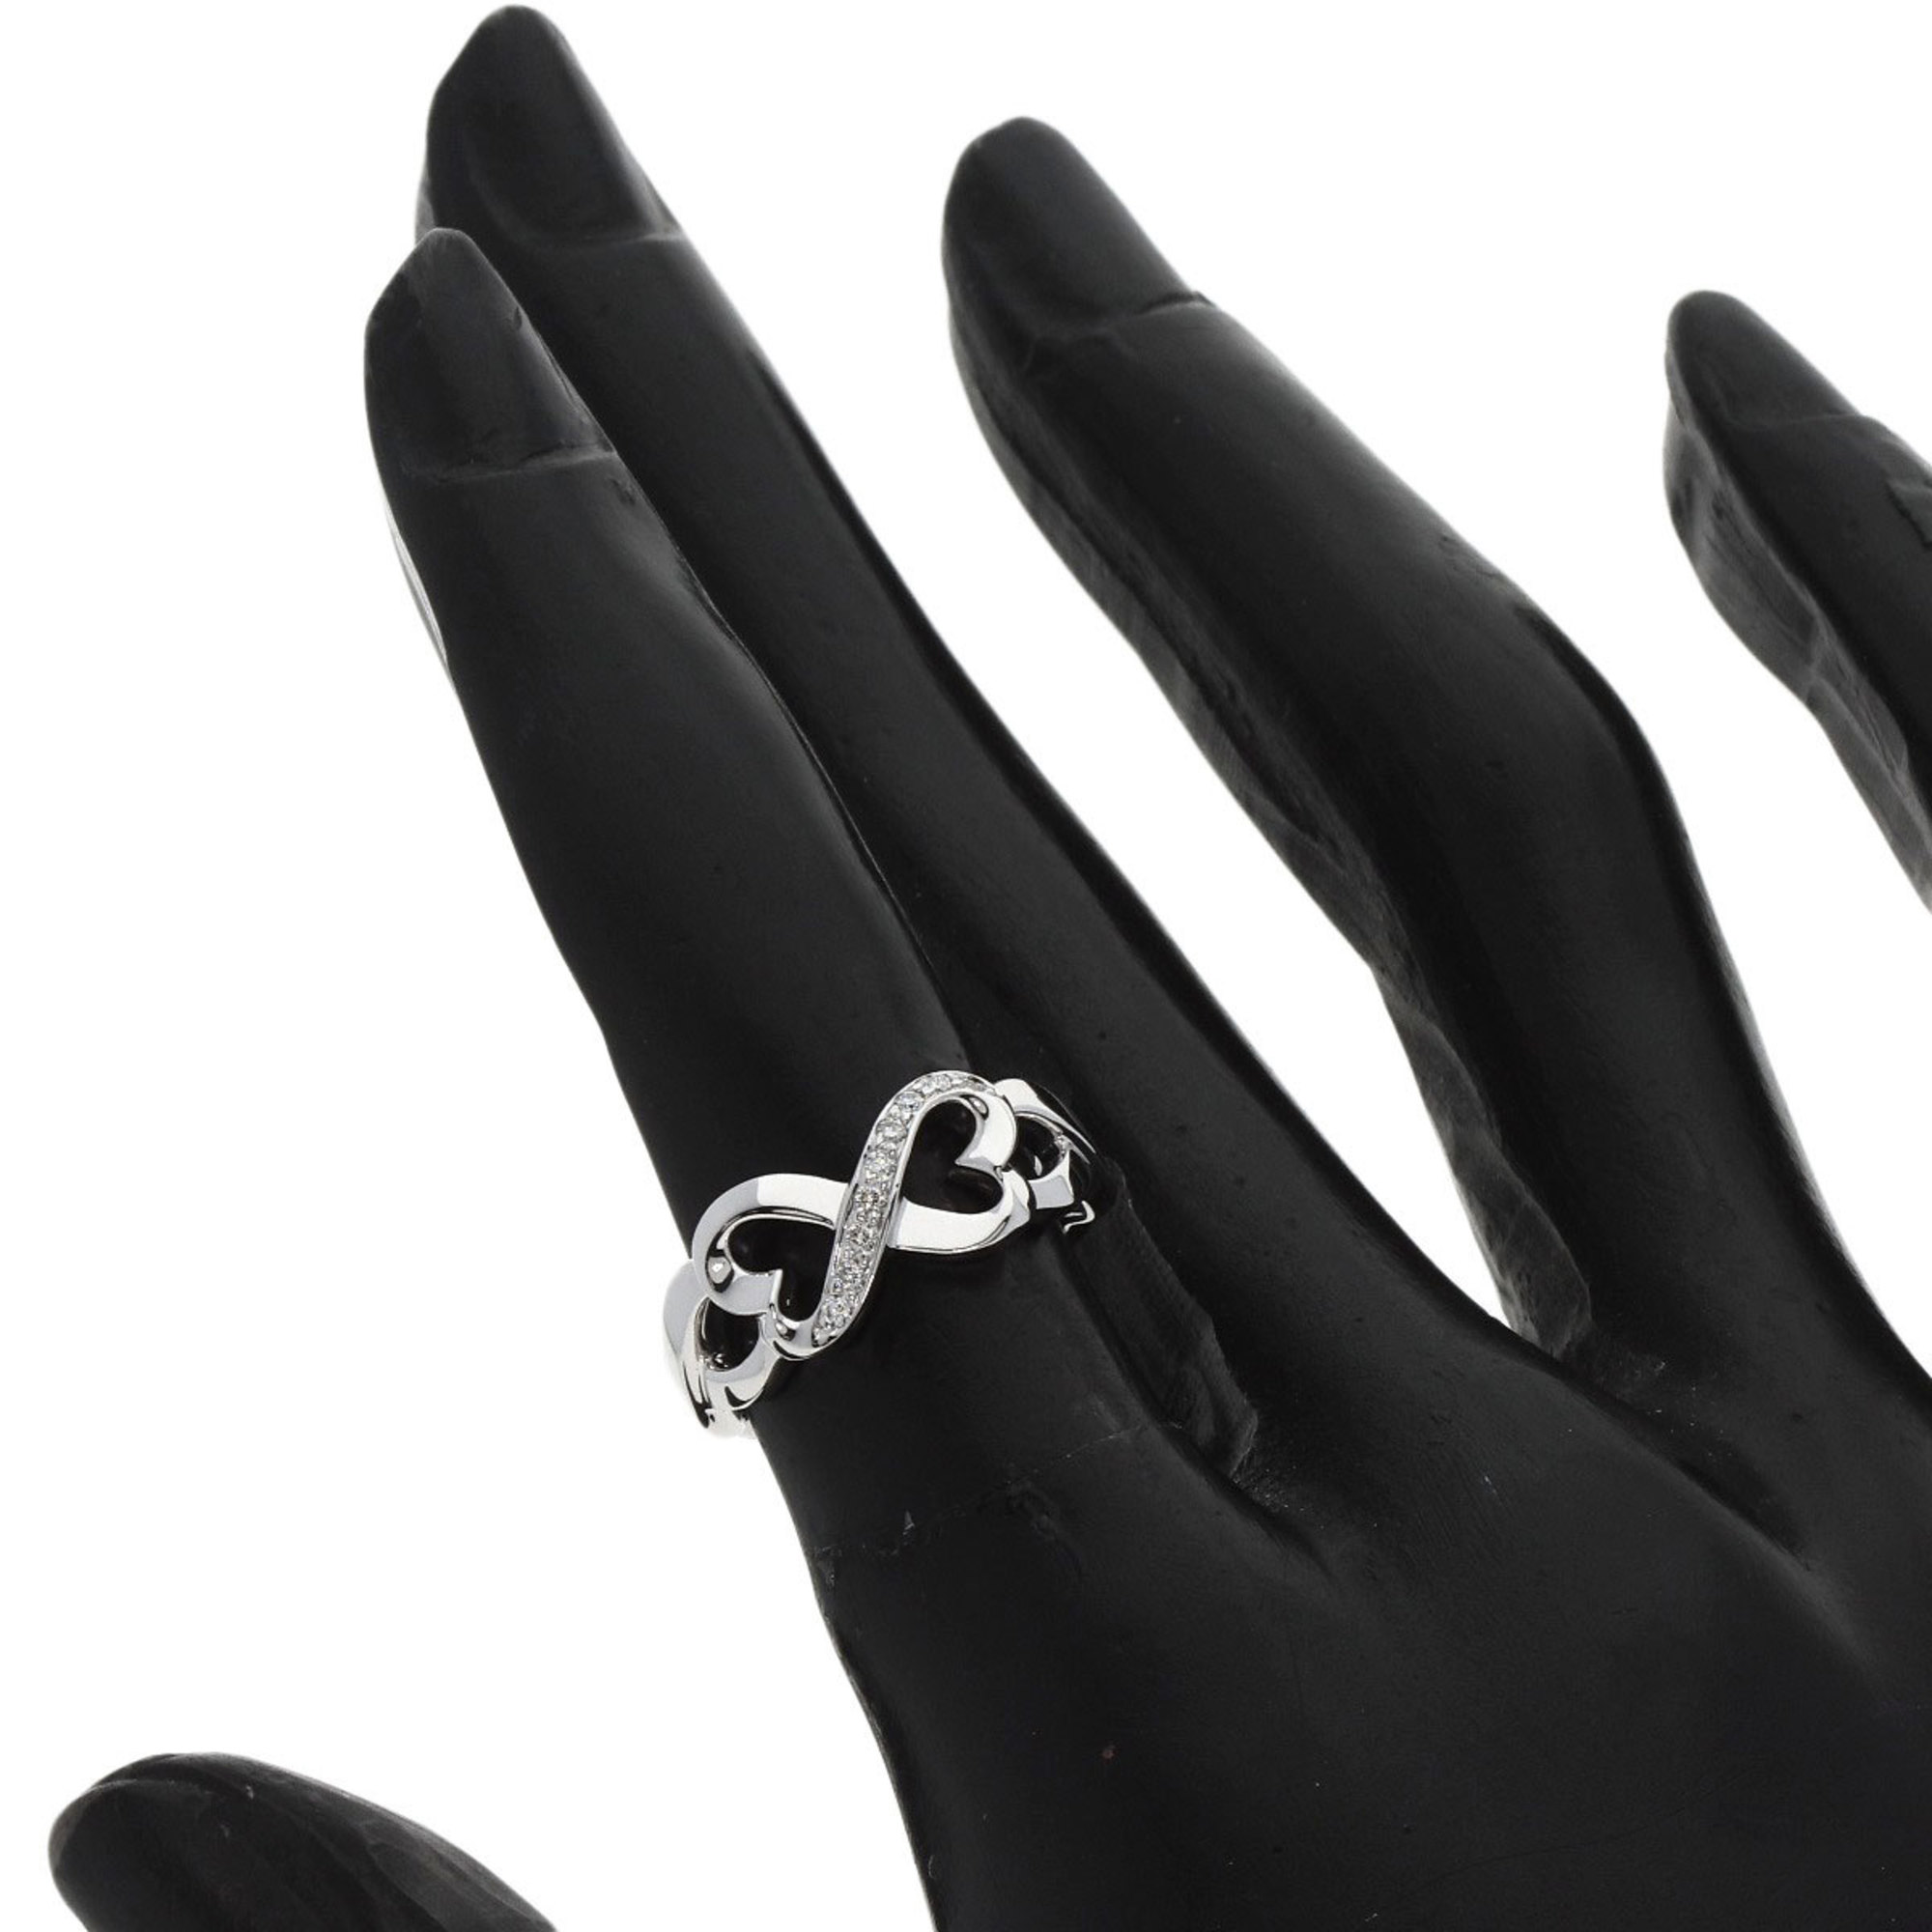 Tiffany Double Loving Heart Diamond Ring, 18K White Gold, Women's